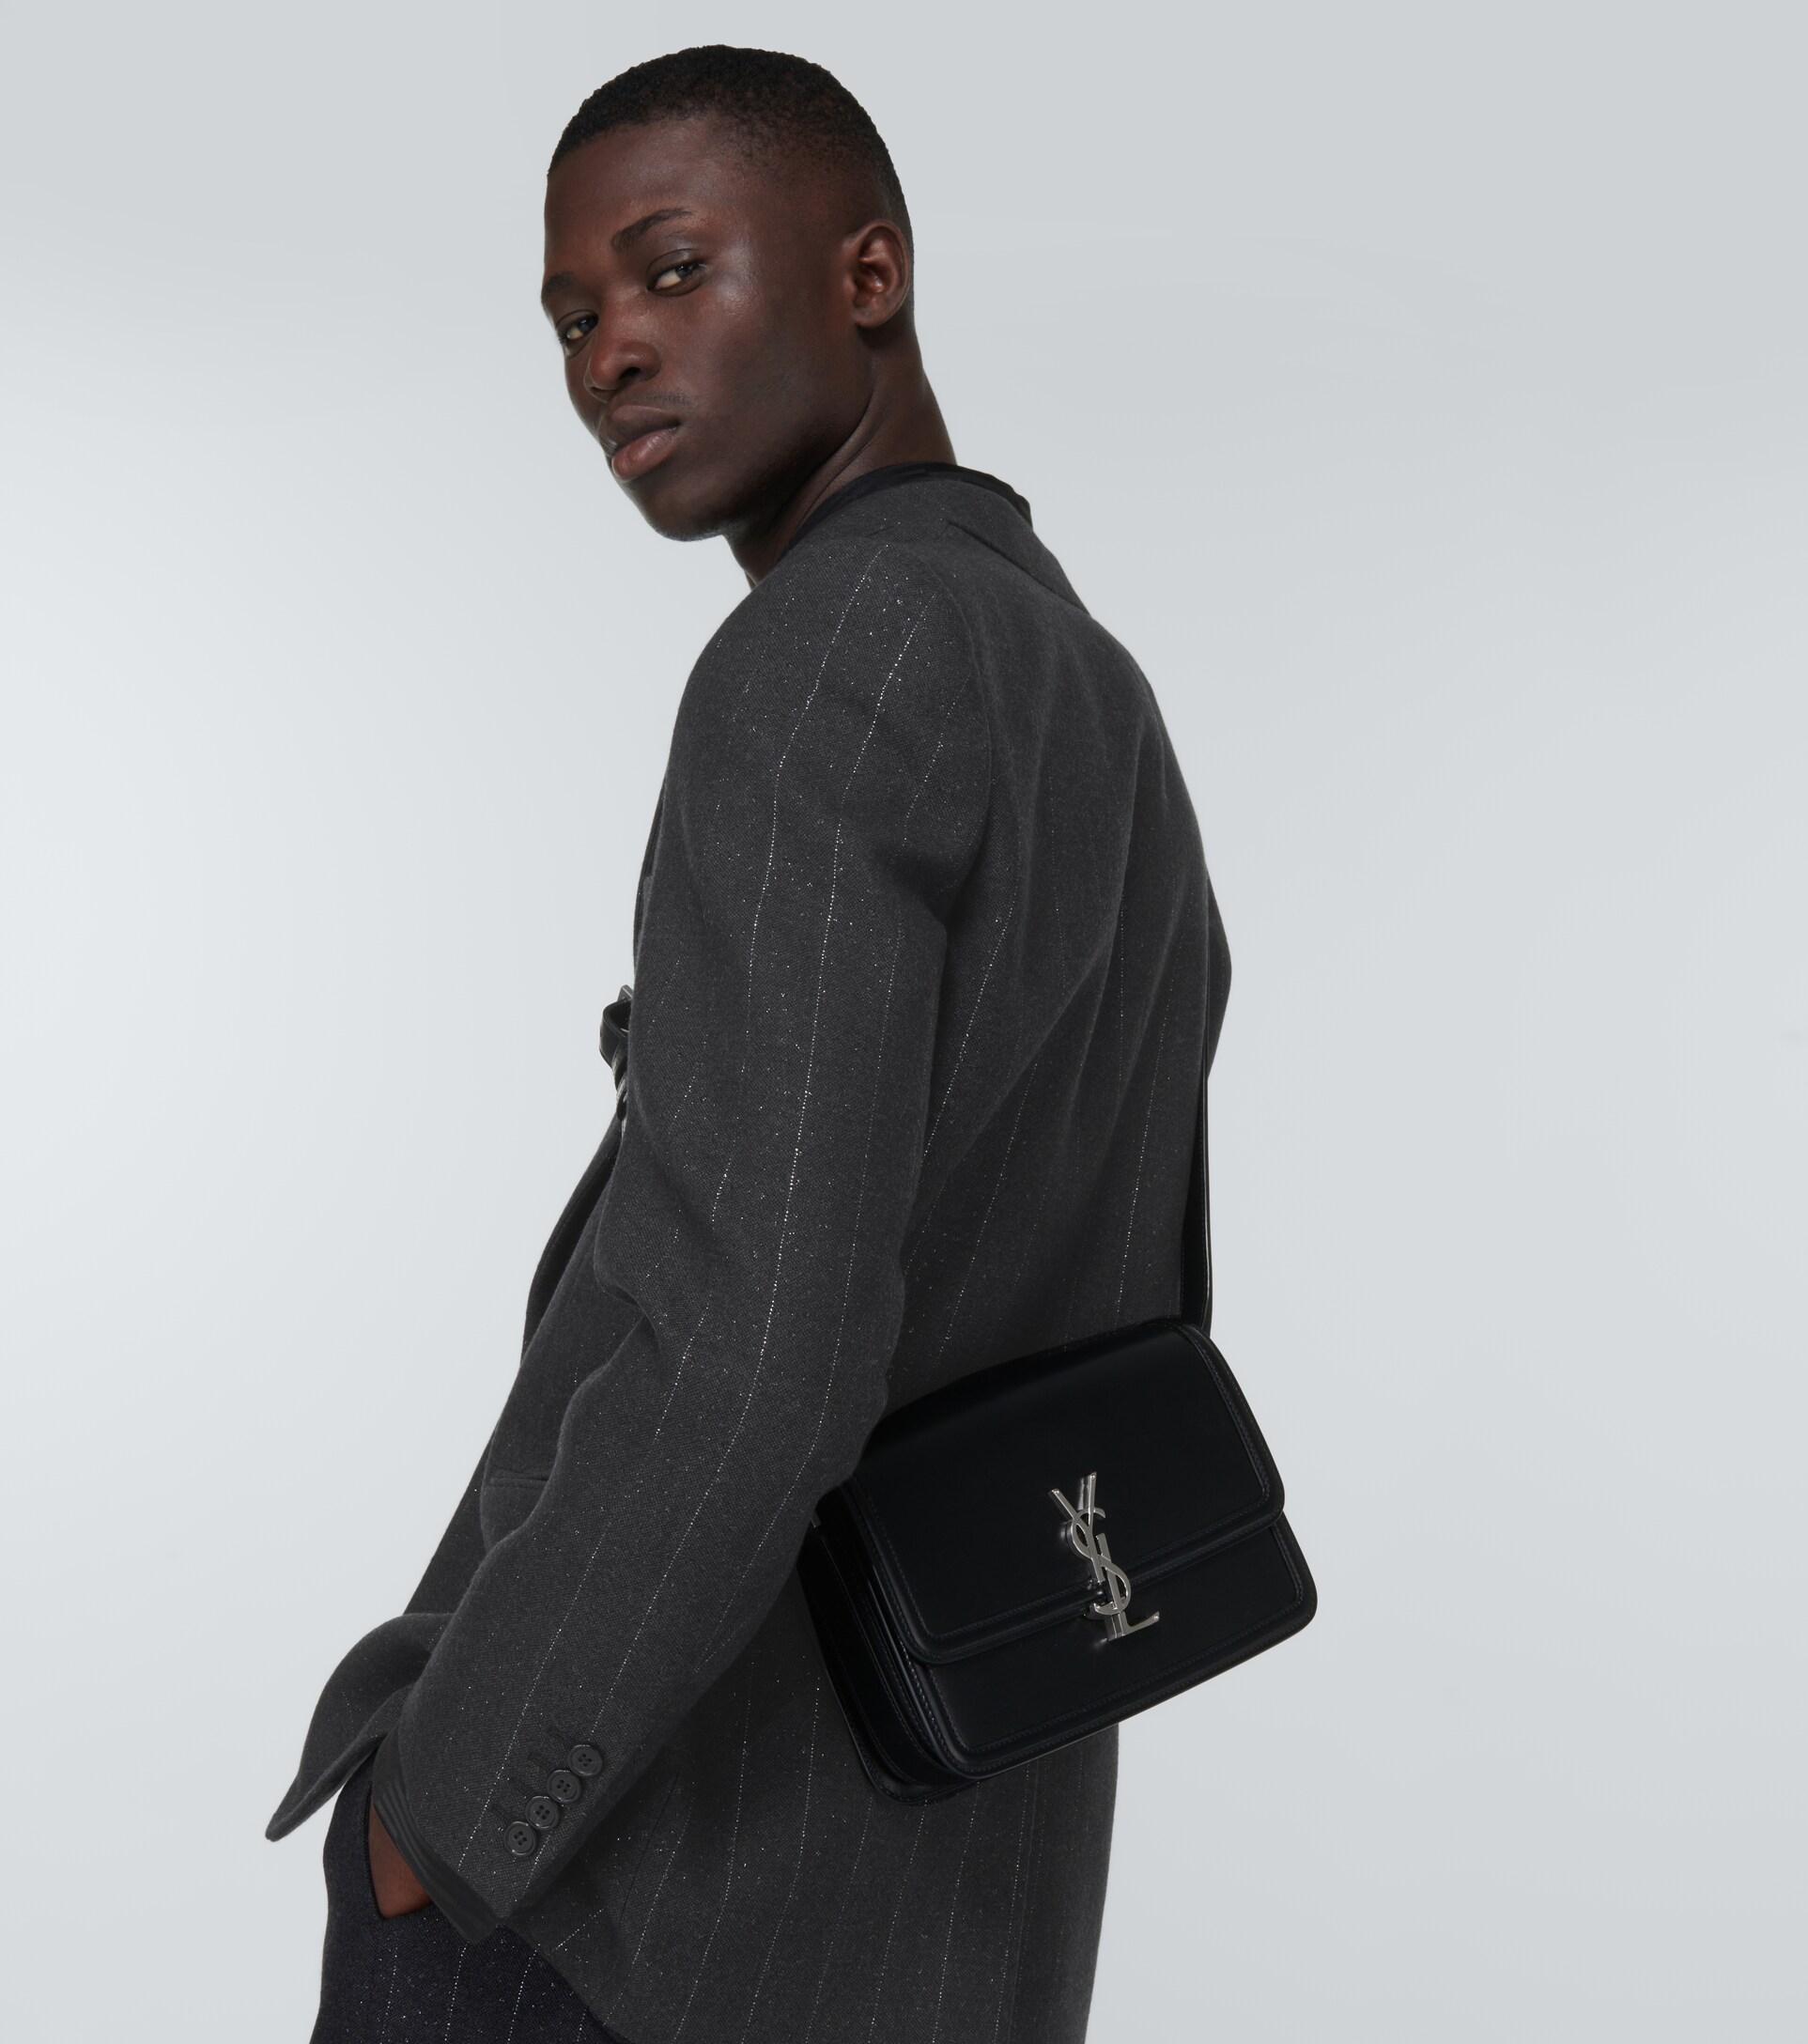 Saint Laurent Men's Solferino Leather Monogram Crossbody Bag, M